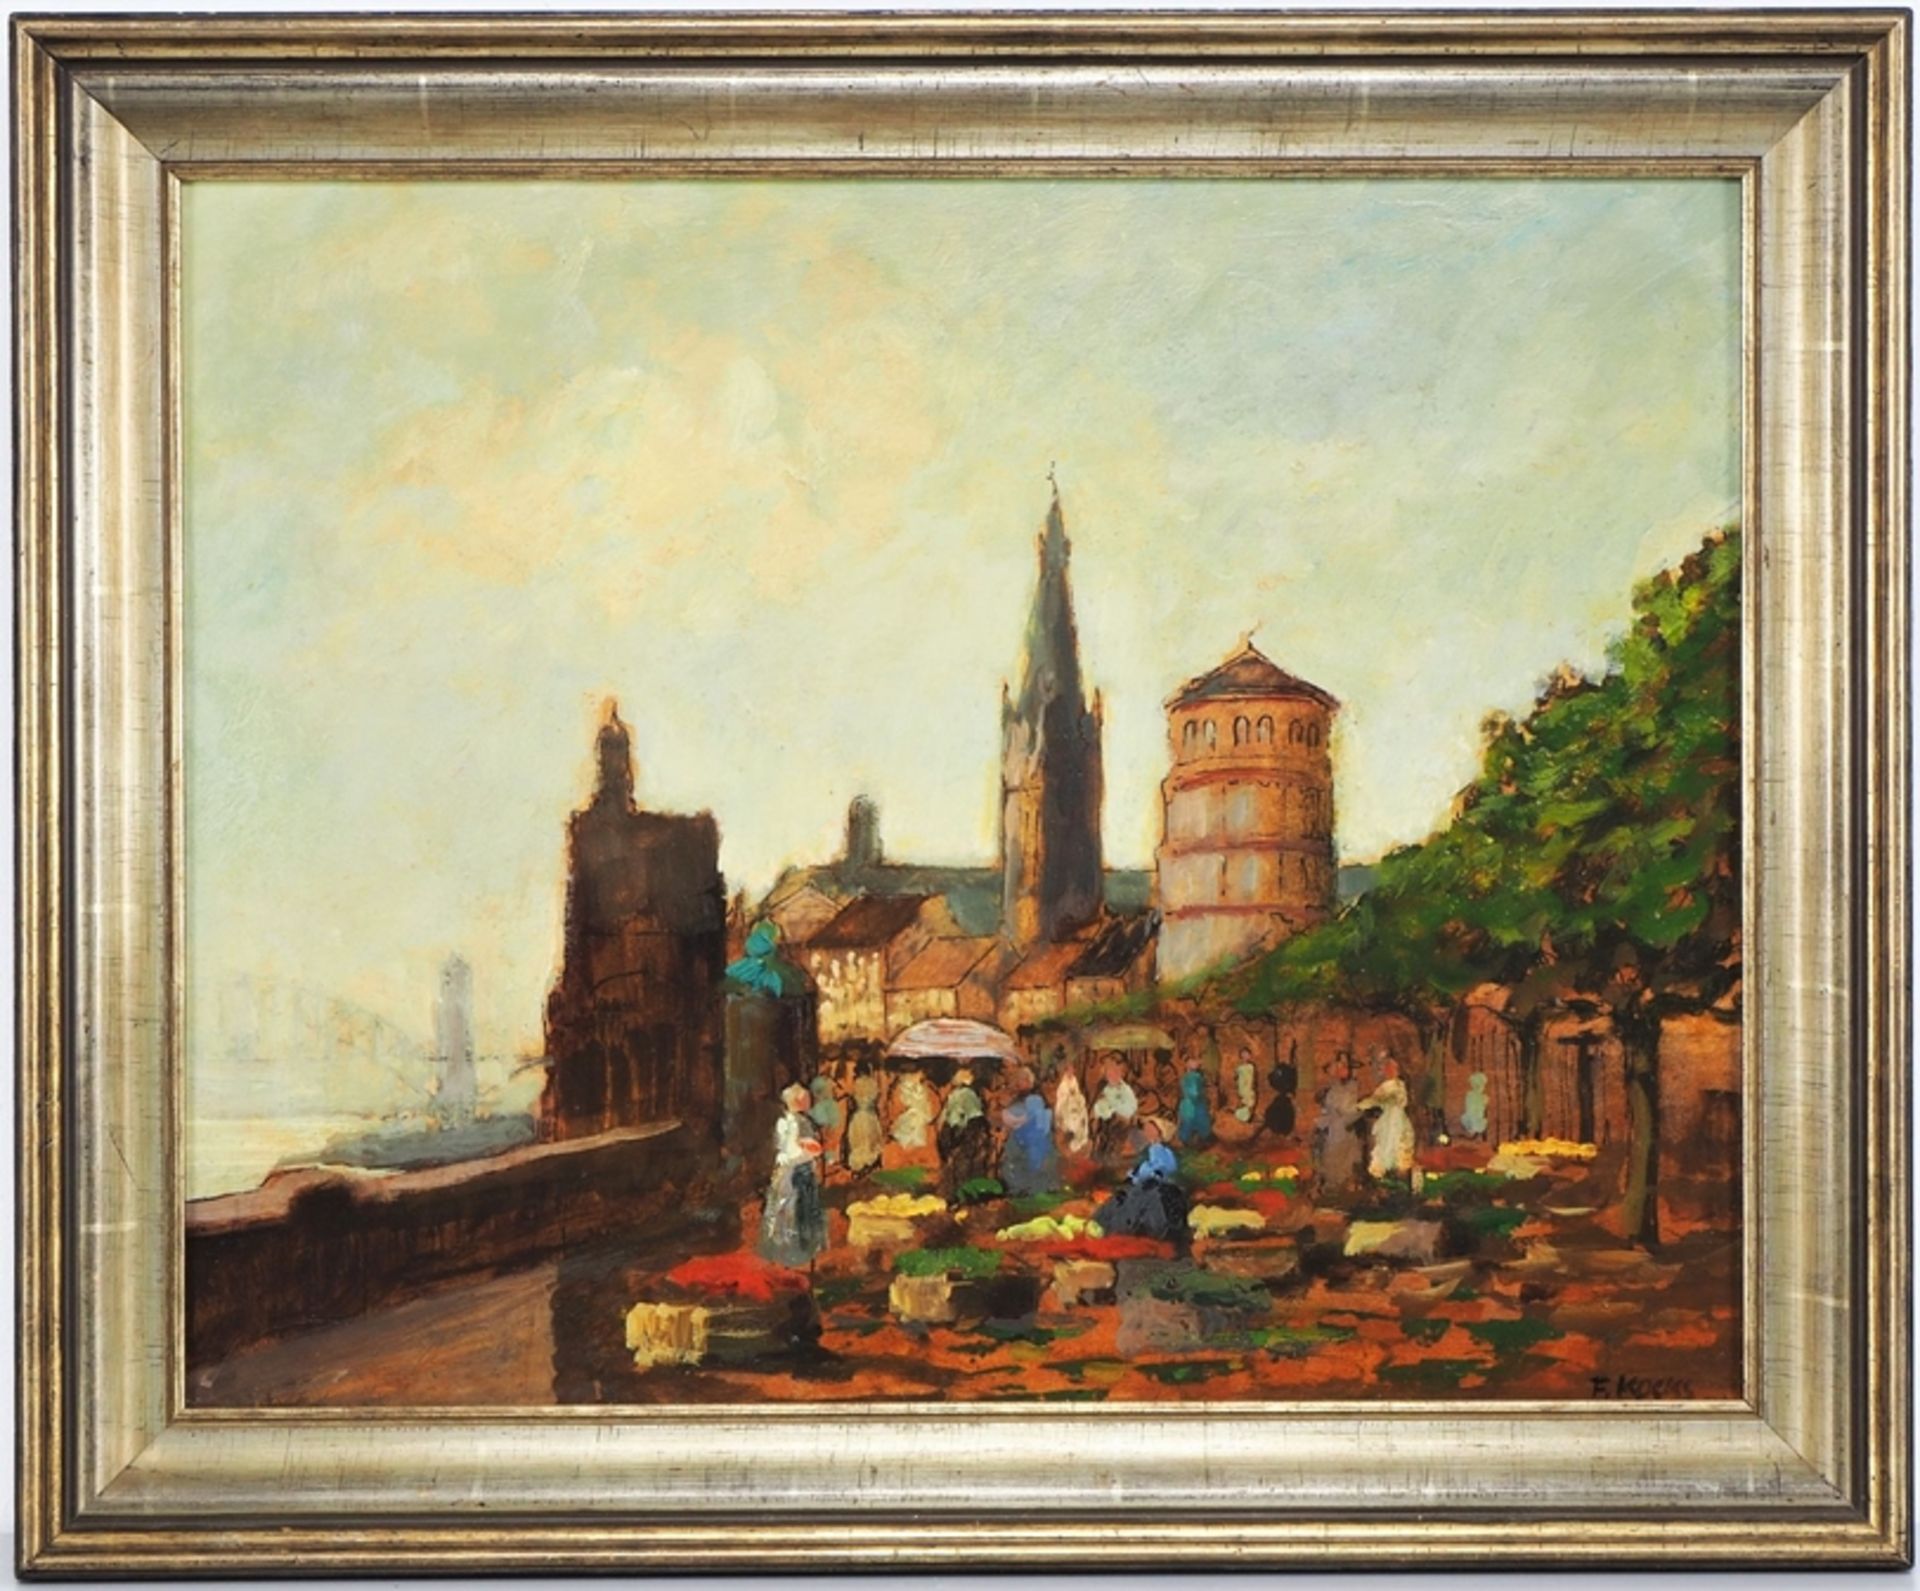 Fred Kocks (1905, Ulm - 1989, Düsseldorf) - Blumenmarkt am Rheinufer